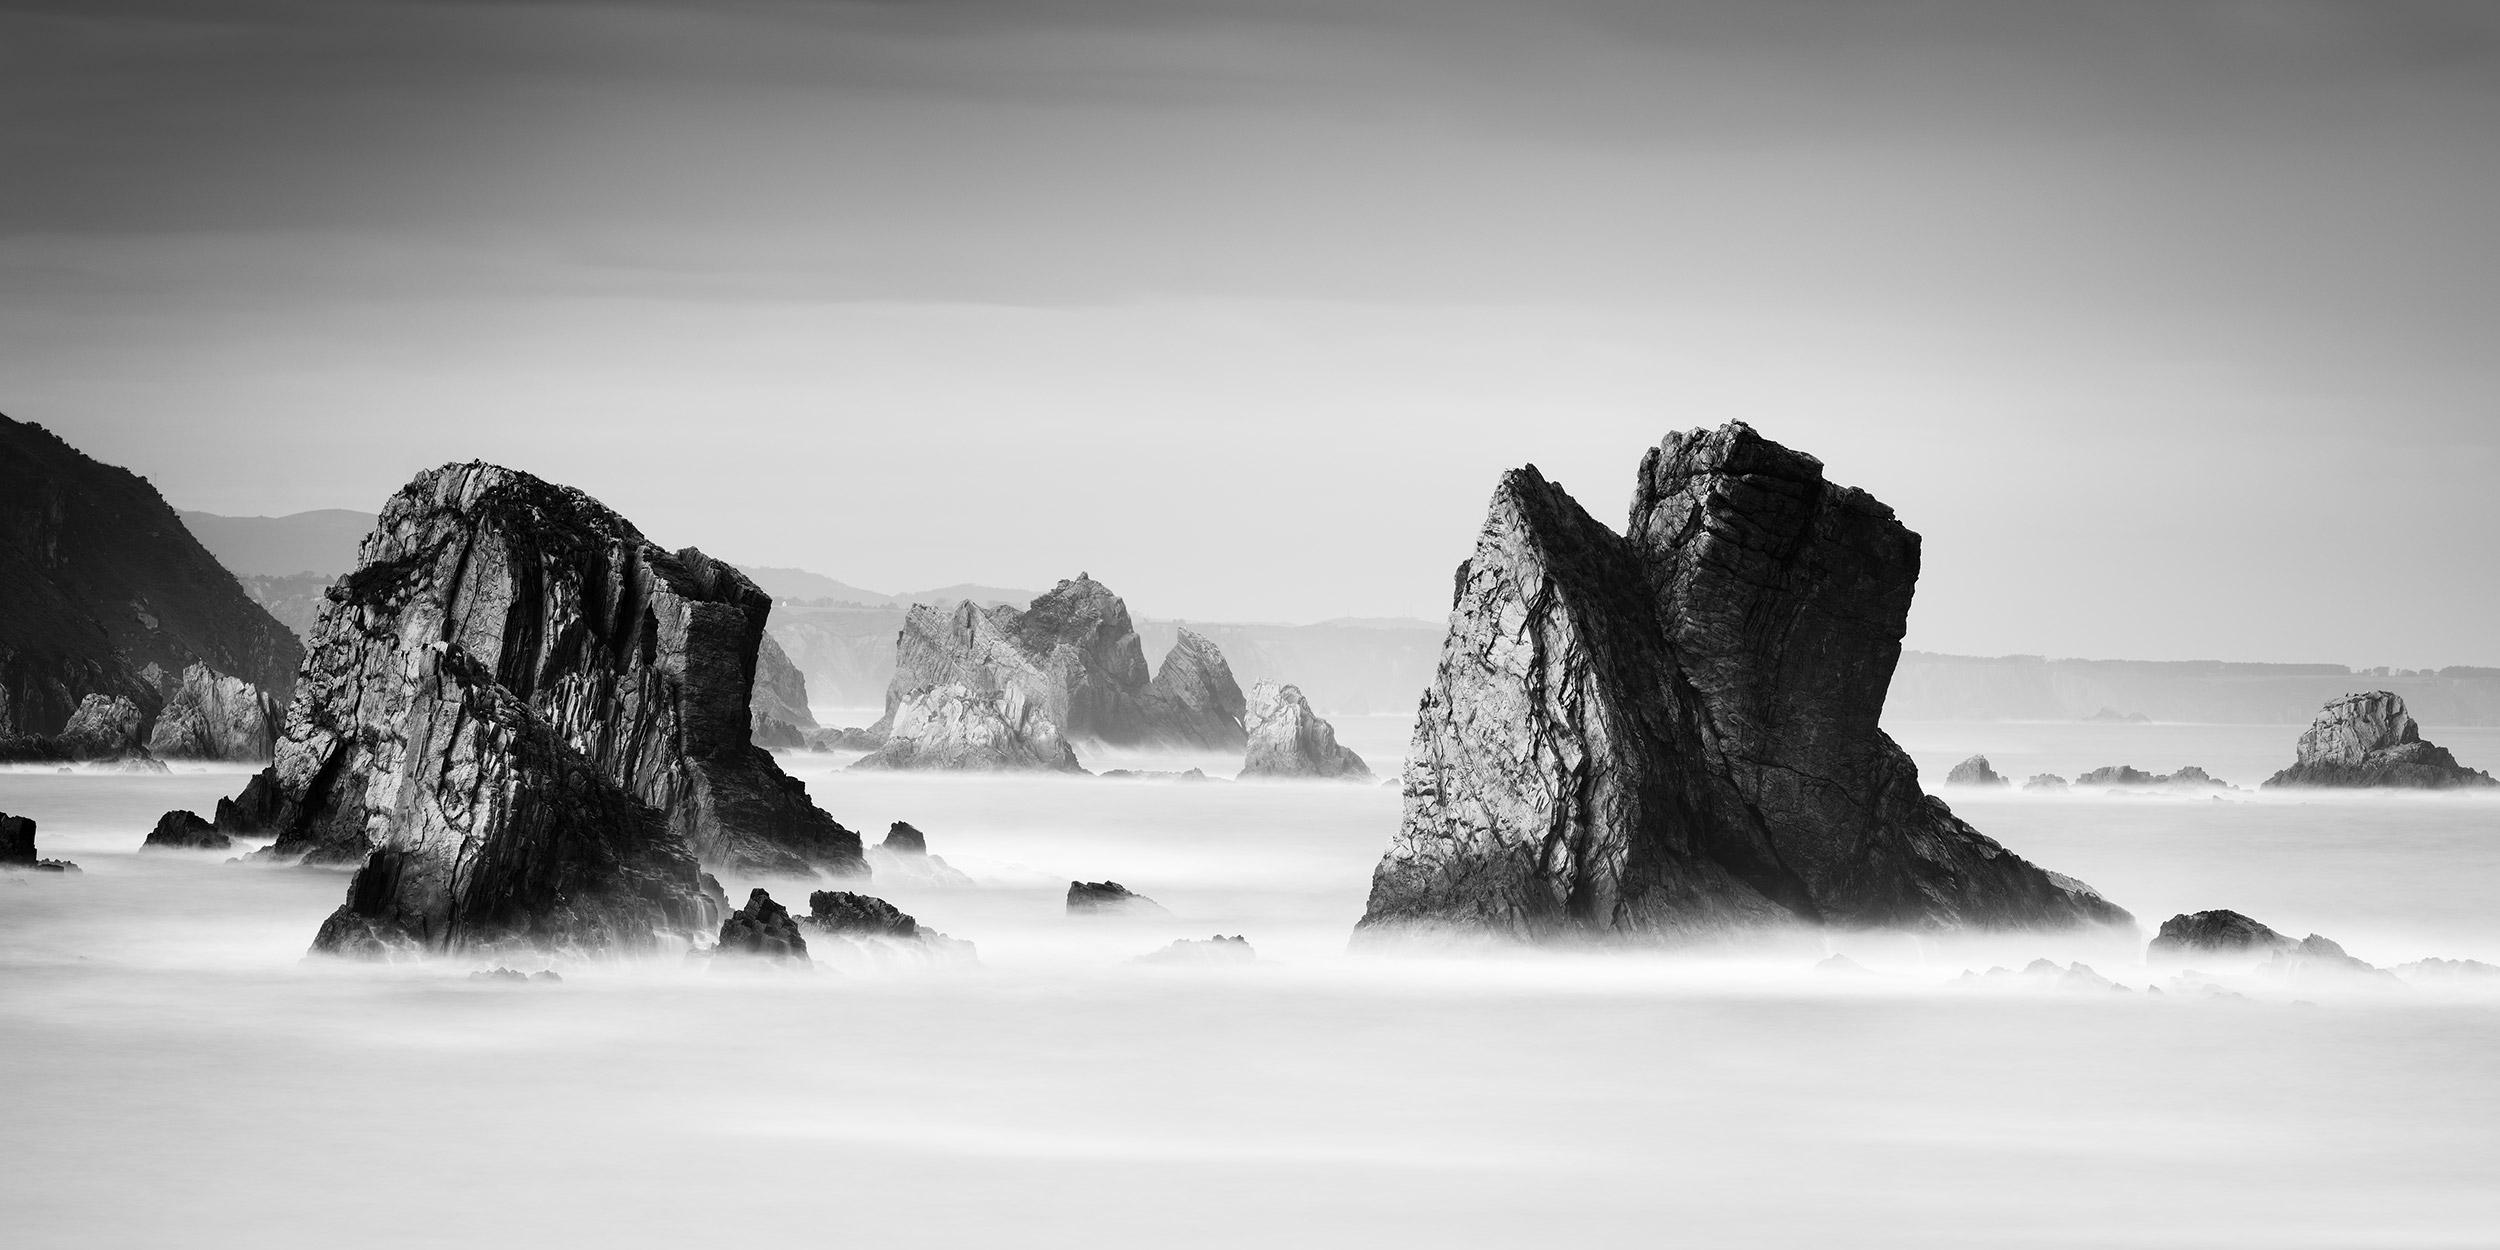 Gerald Berghammer Landscape Photograph - Beach of Silencio, Rocks, Atlantic Ocean, black and white photography, seascape